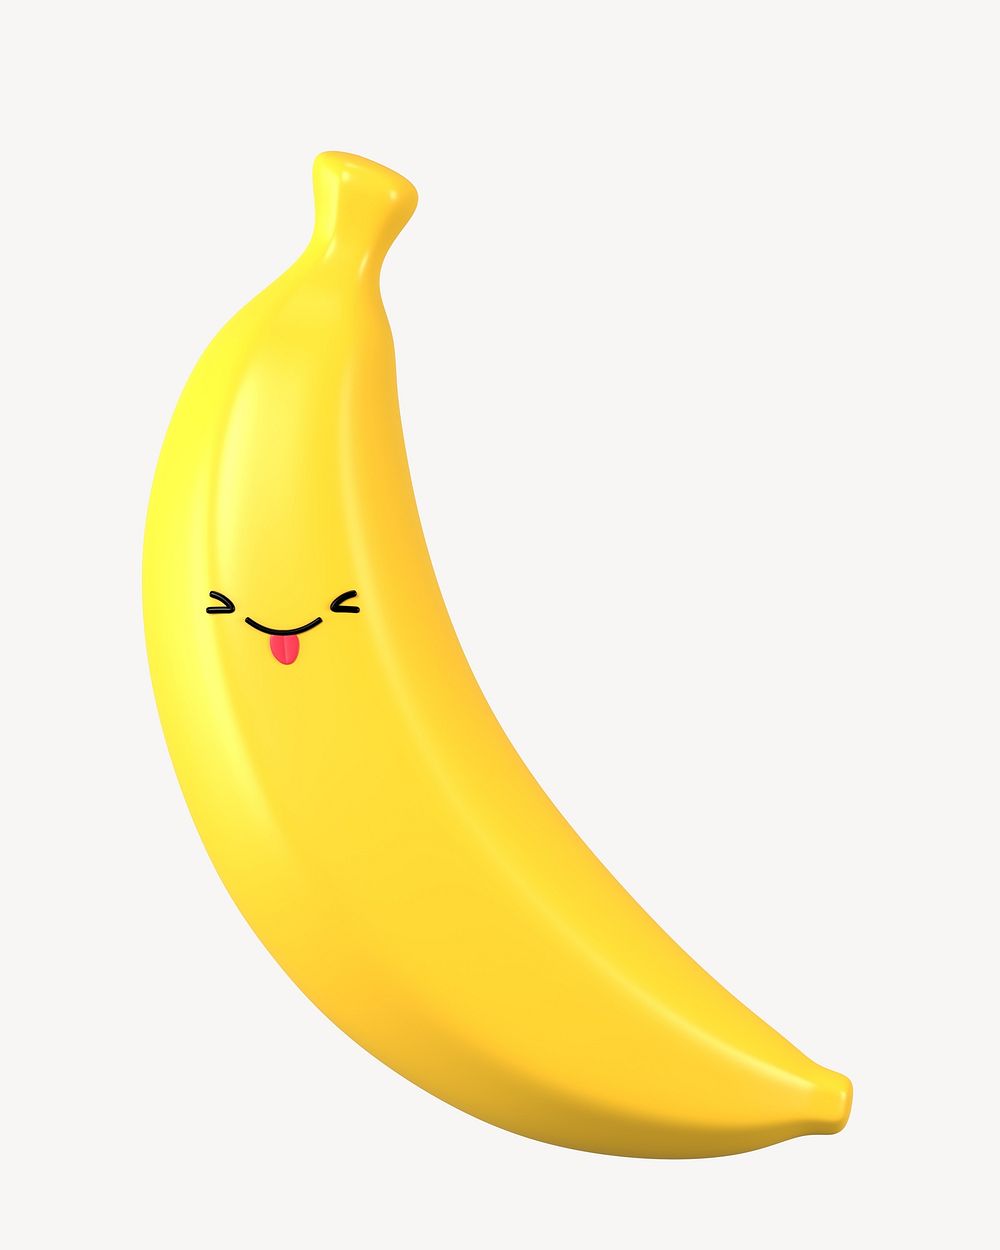 3D playful face banana, emoticon illustration